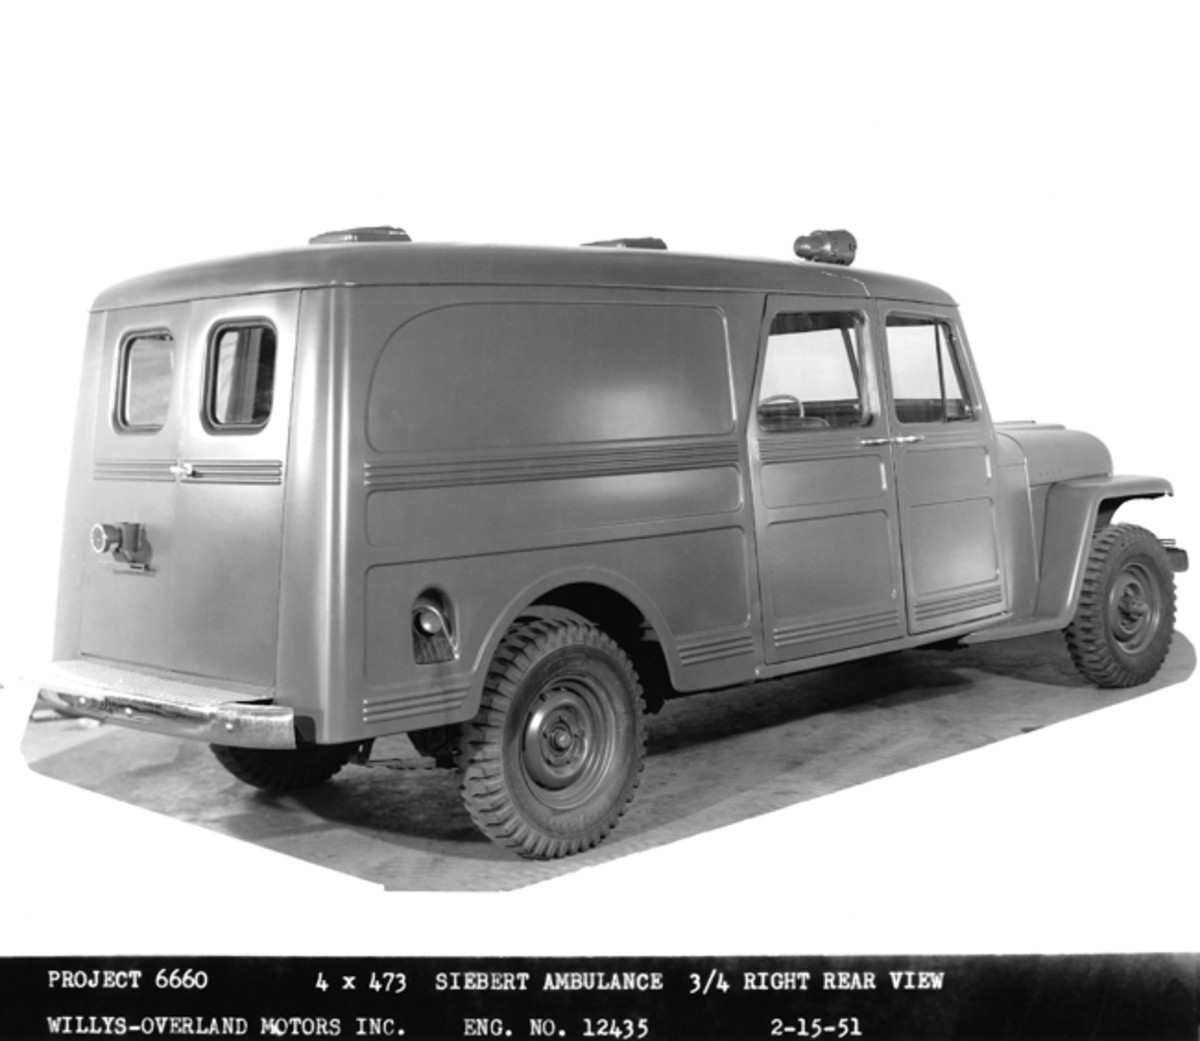 Willys-Overland factory photo of the Siebert Ambulance. February 15, 1951.